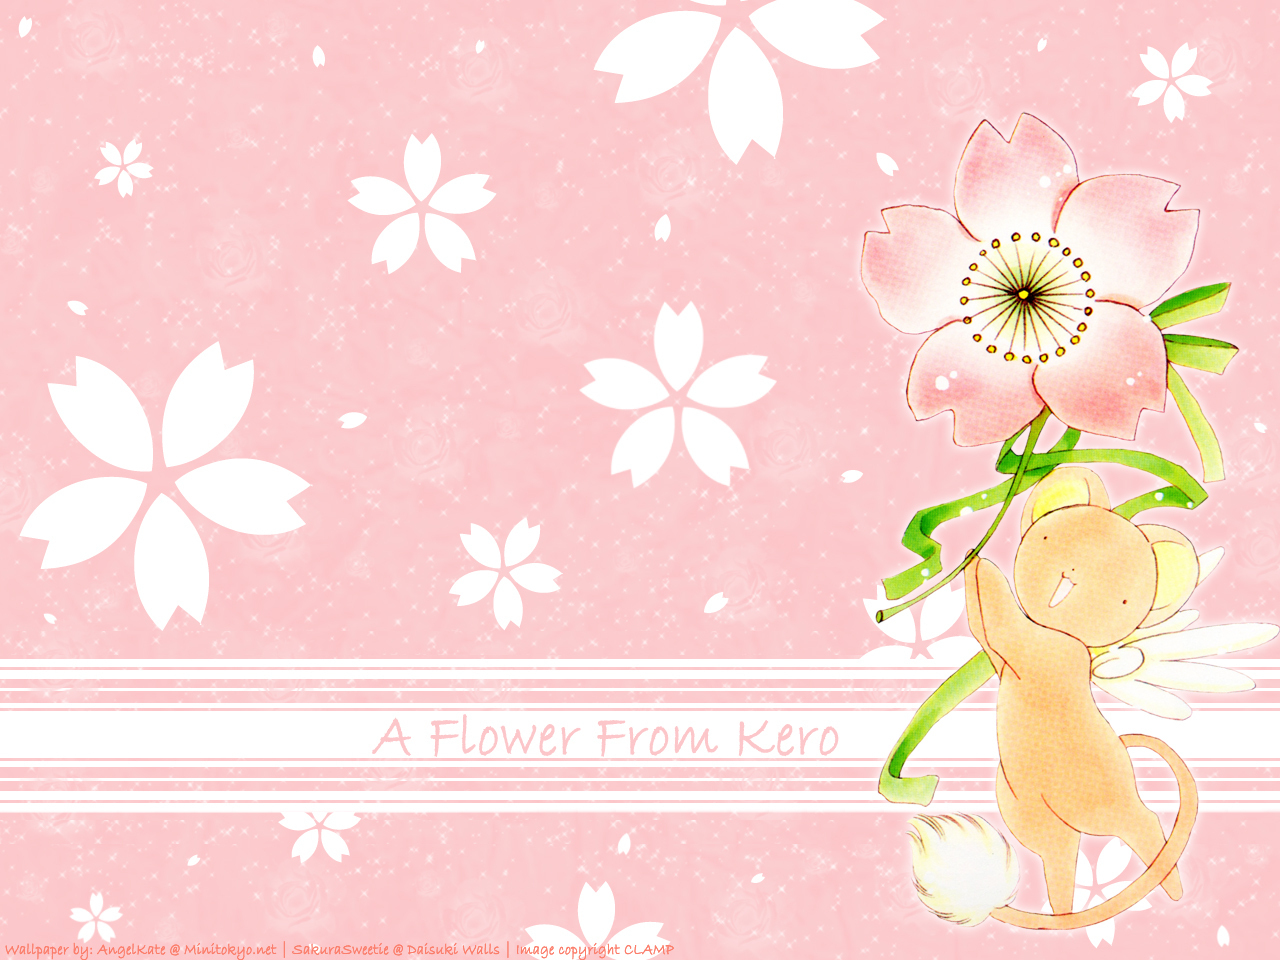 Cardcaptor Sakura Image A Flower From Kero Wallpaper